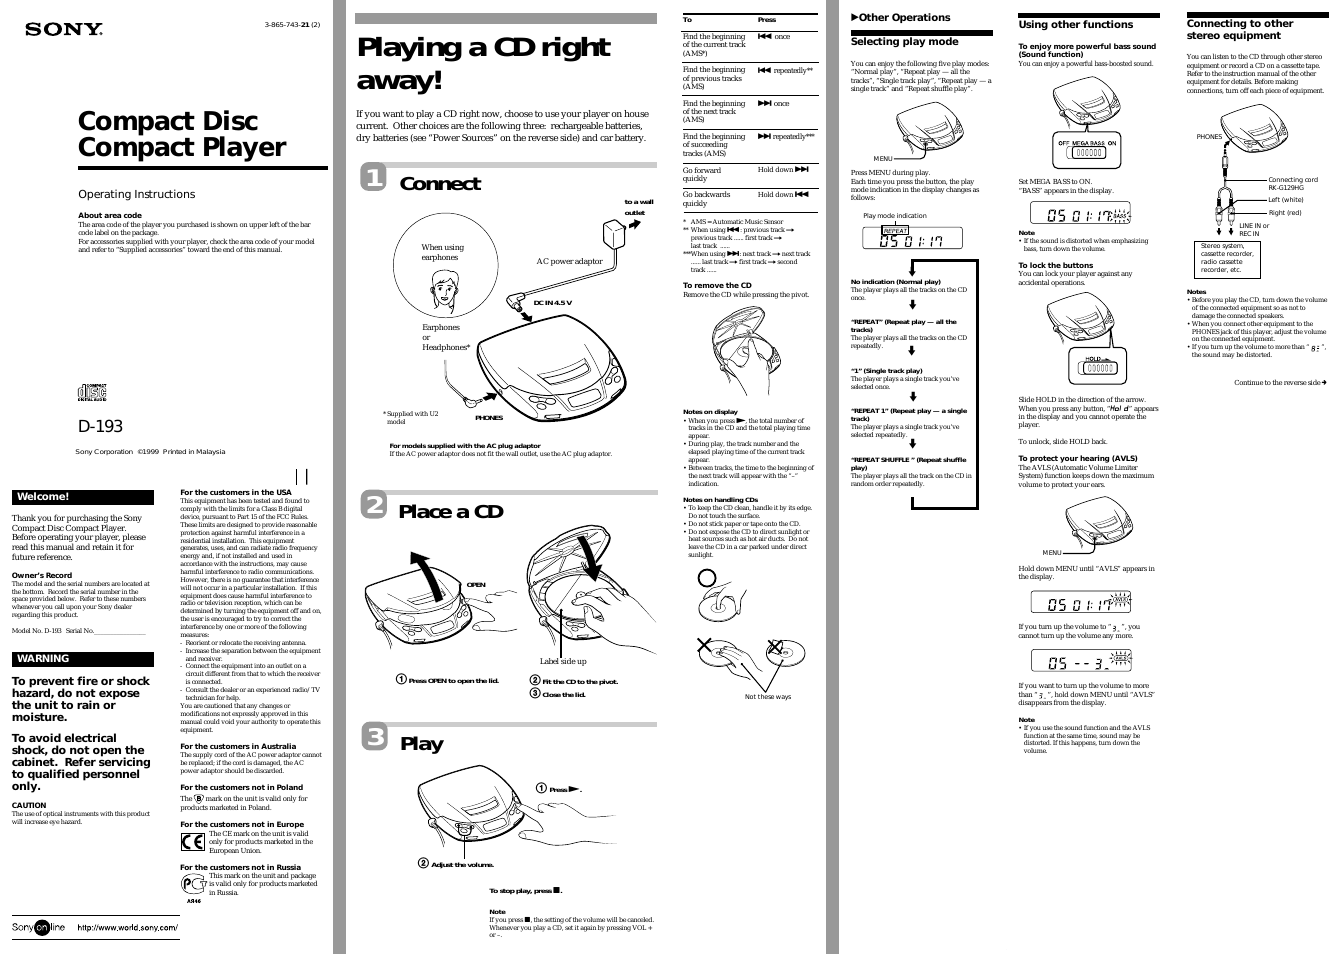 CD Walkman D-193 (Page 1)